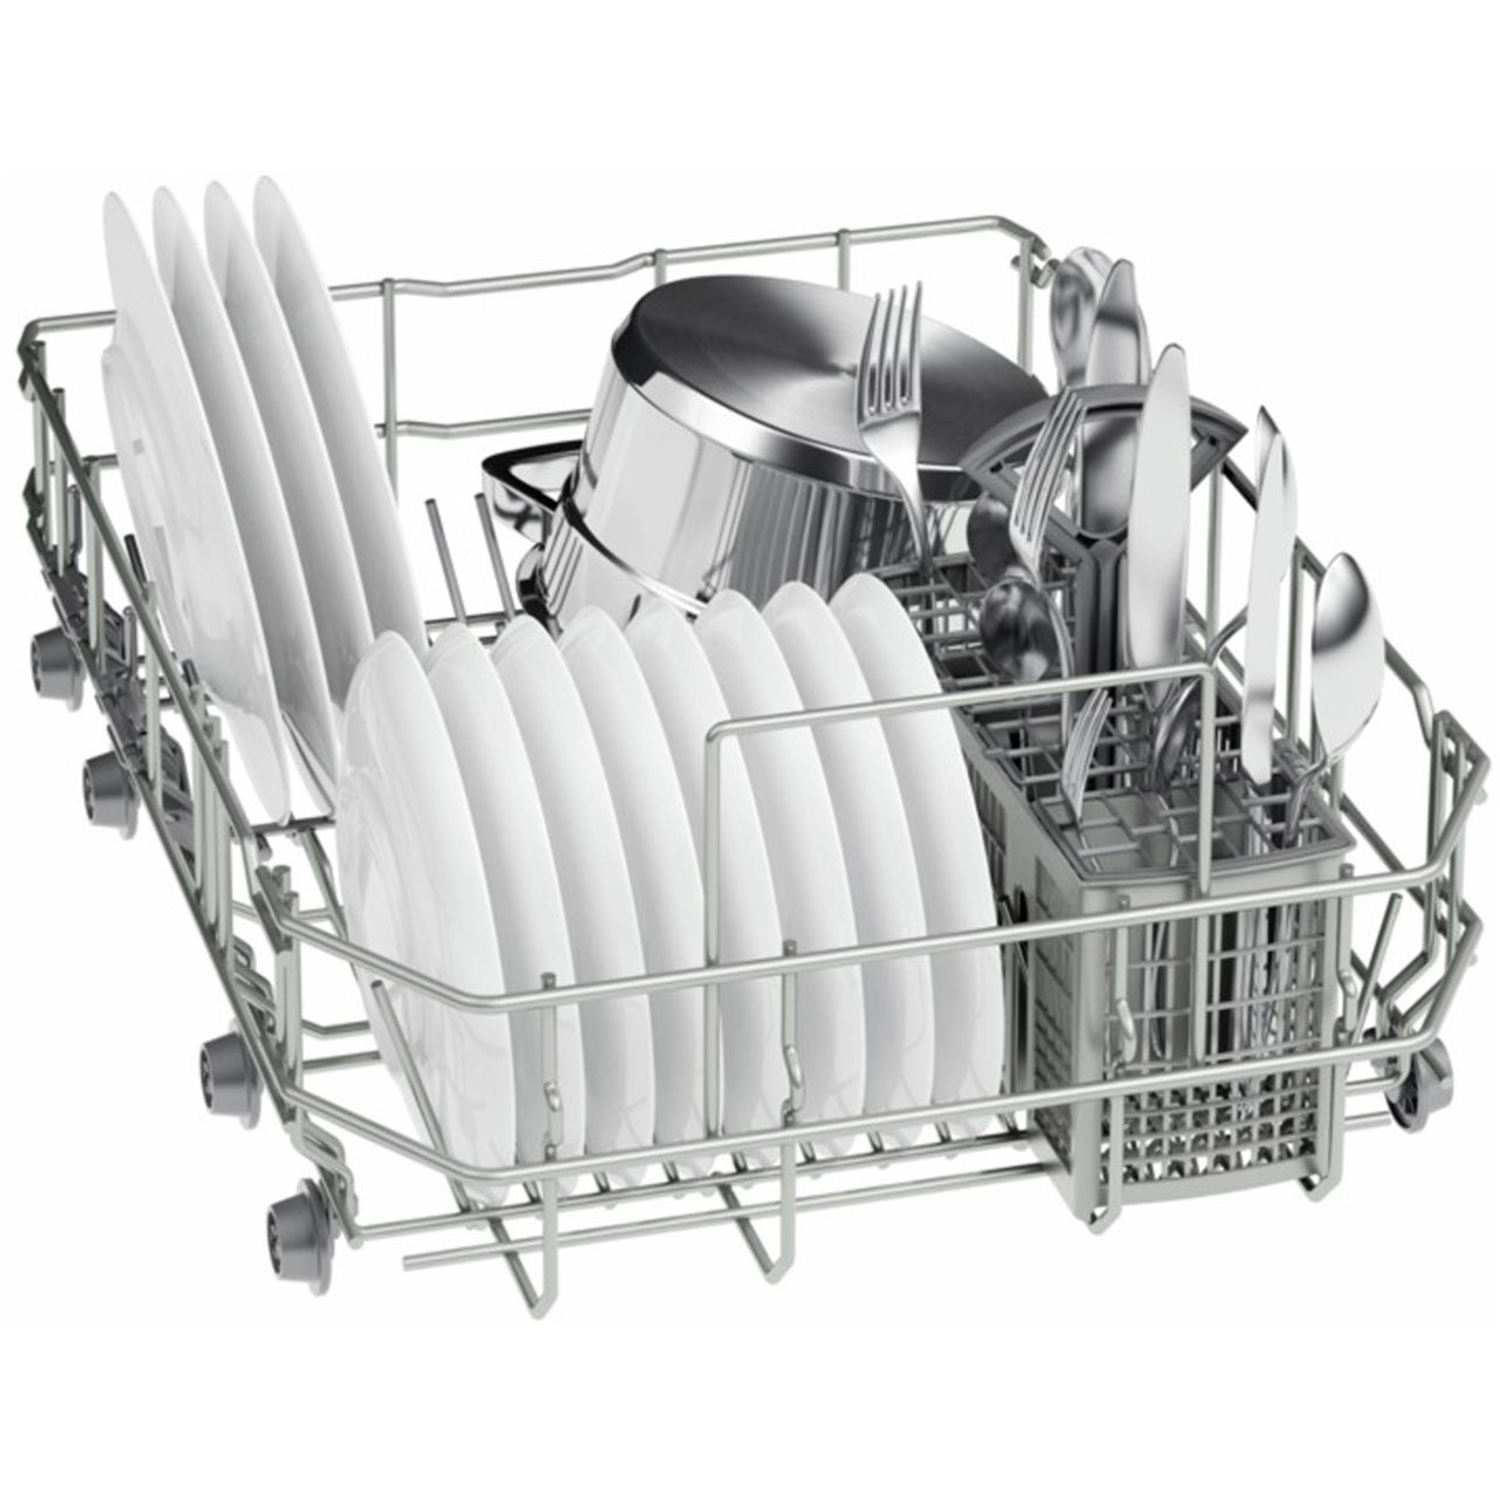 Bosch Slimline Dishwasher - White - A+ Rated - 3